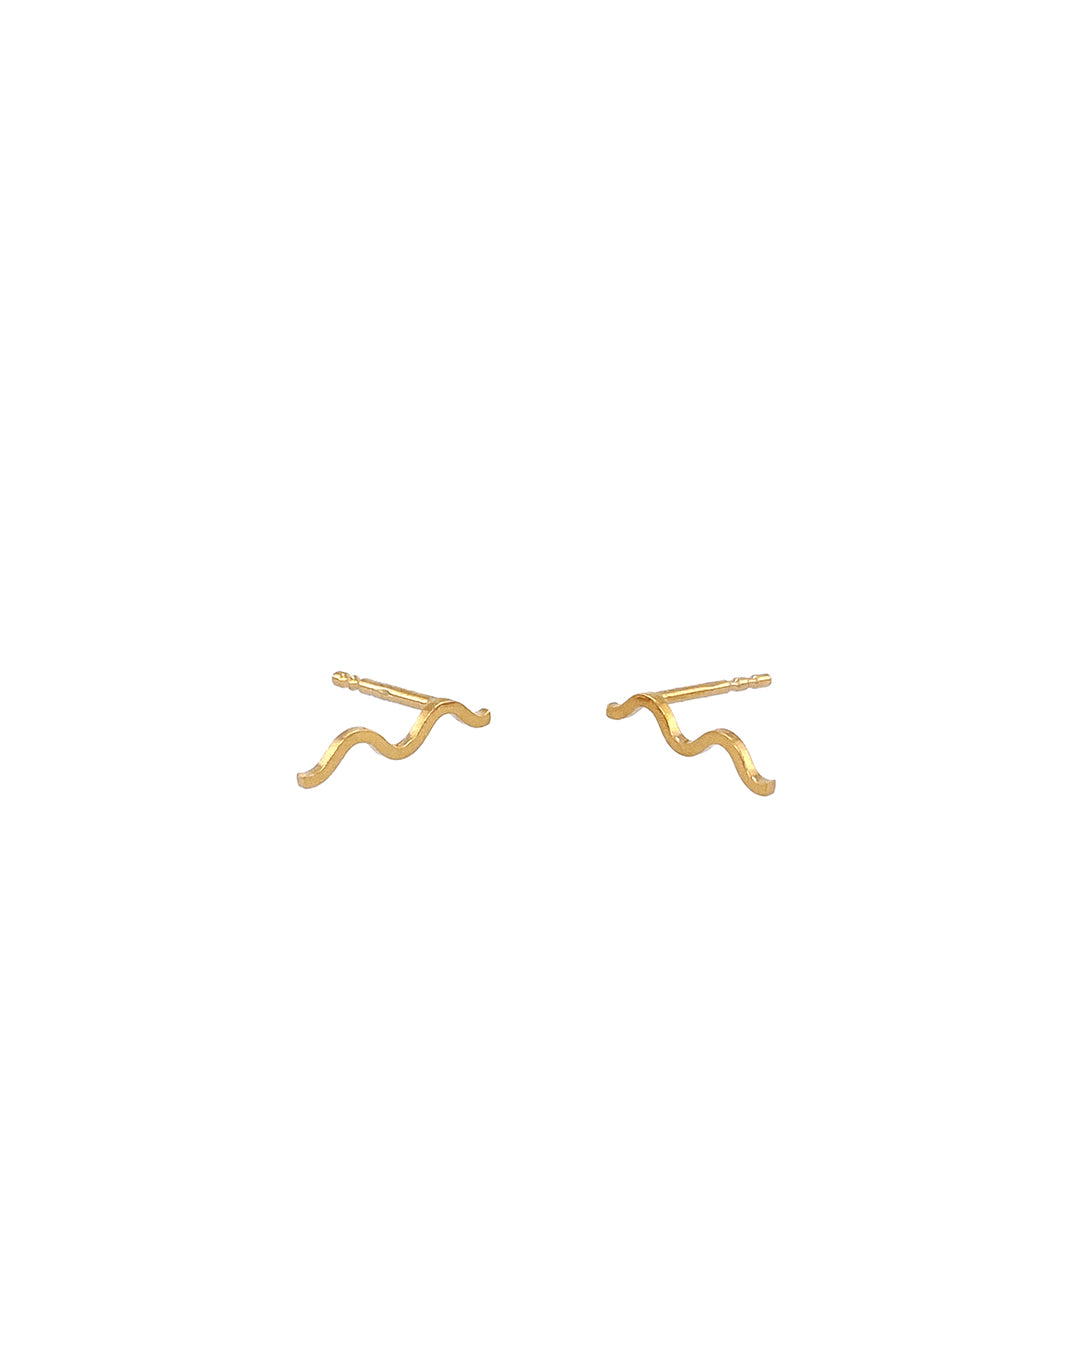 IDAMARI Unna Earrings in Gold available at Lahn.shop